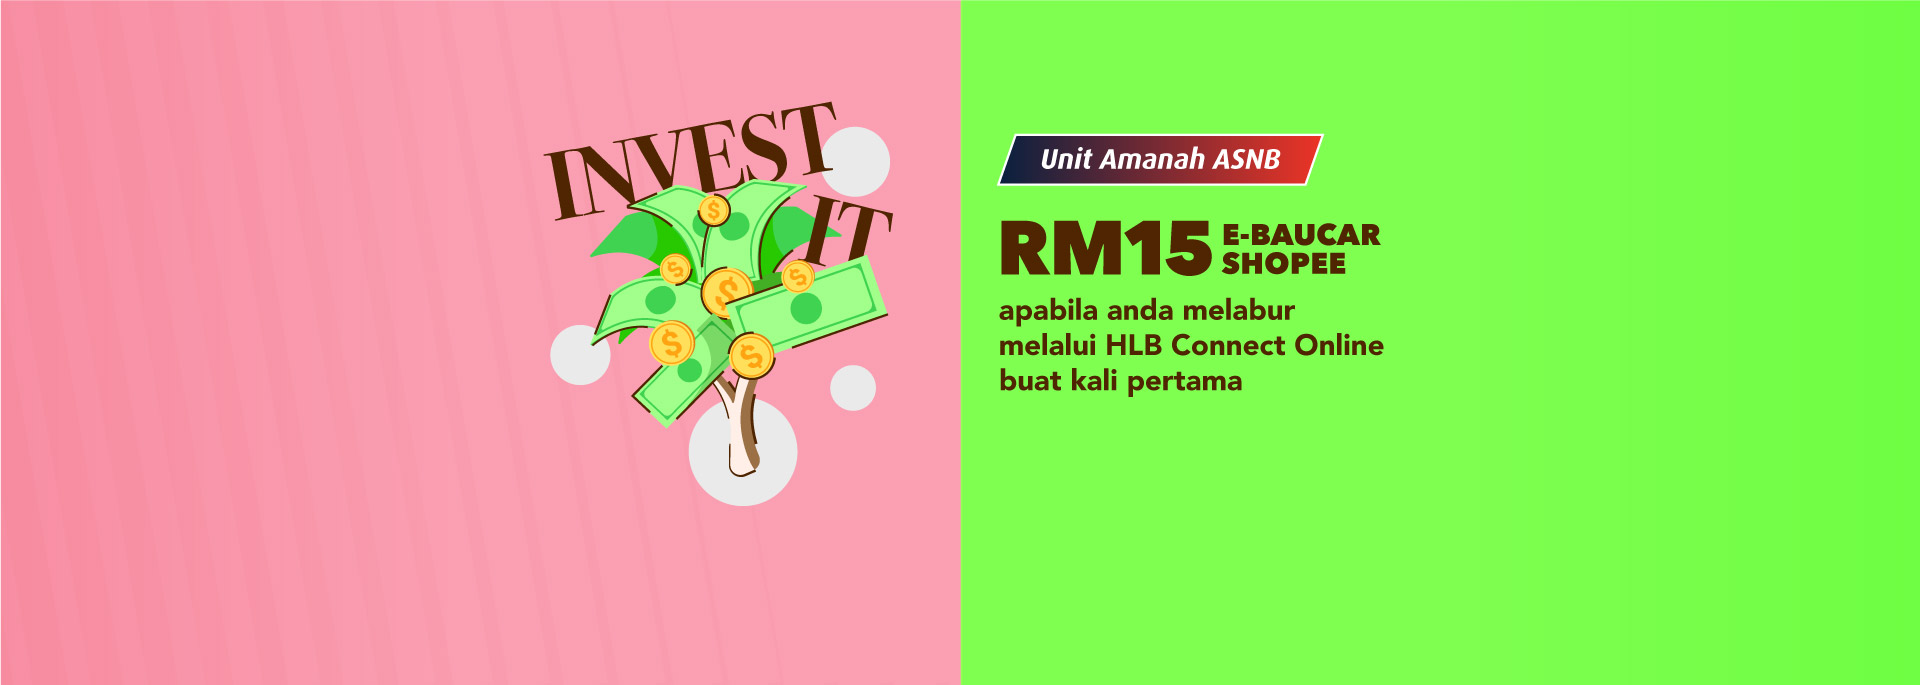 Unit Amanah ASNB - Dapatkan e-Baucar Shopee RM15 anda